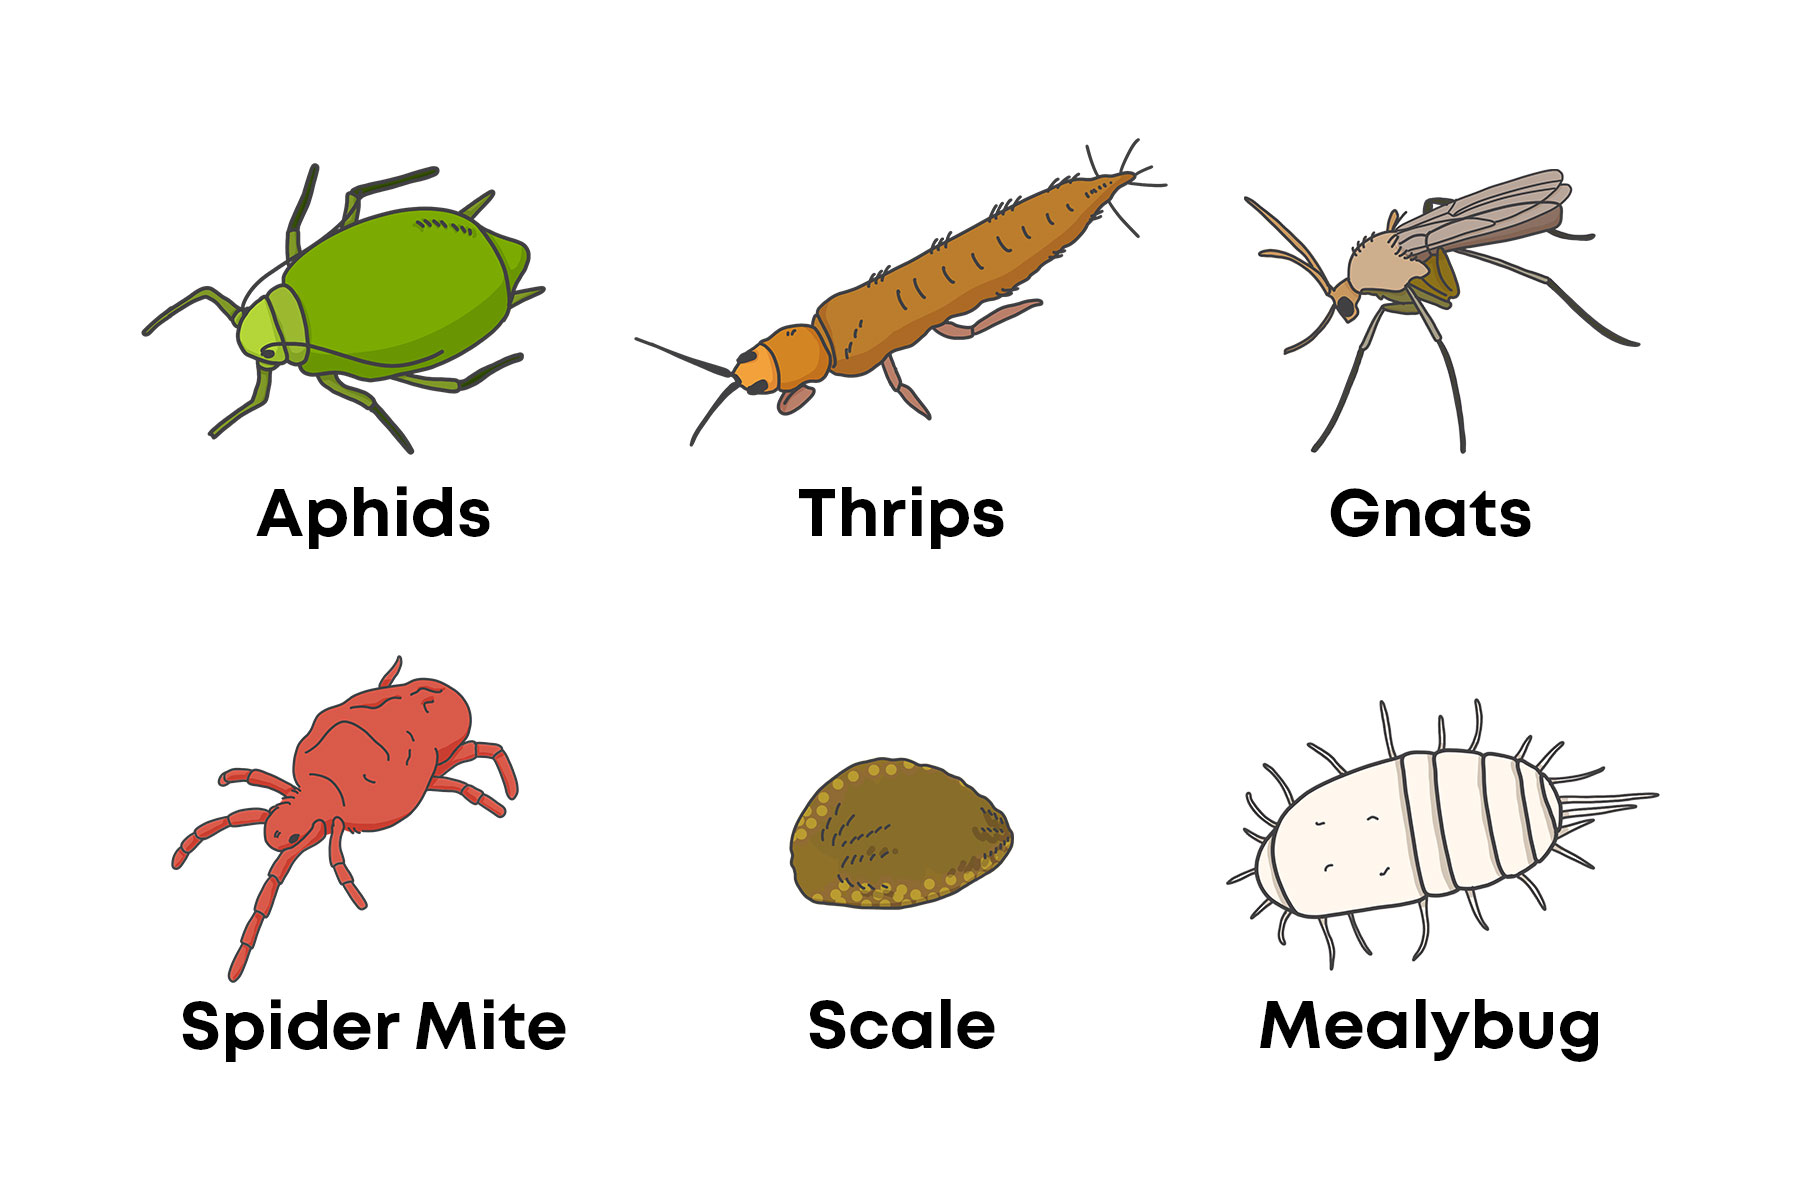 How to Identify & Treat Common Houseplant Pests